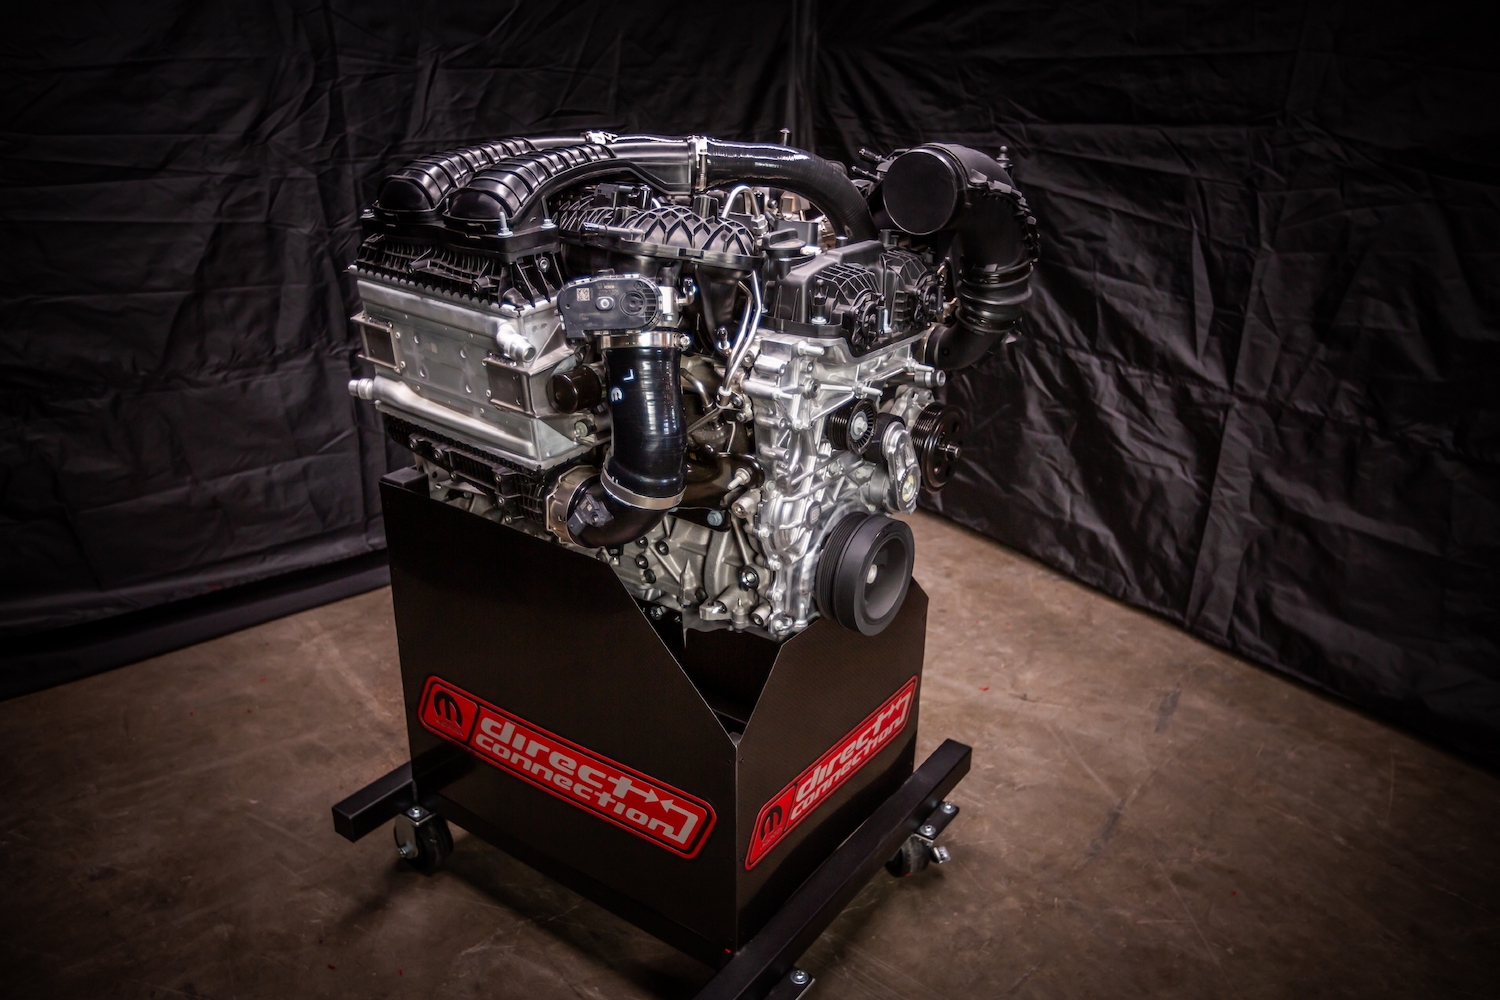 Stellantis HurriCrate turbocharged I6 engine.